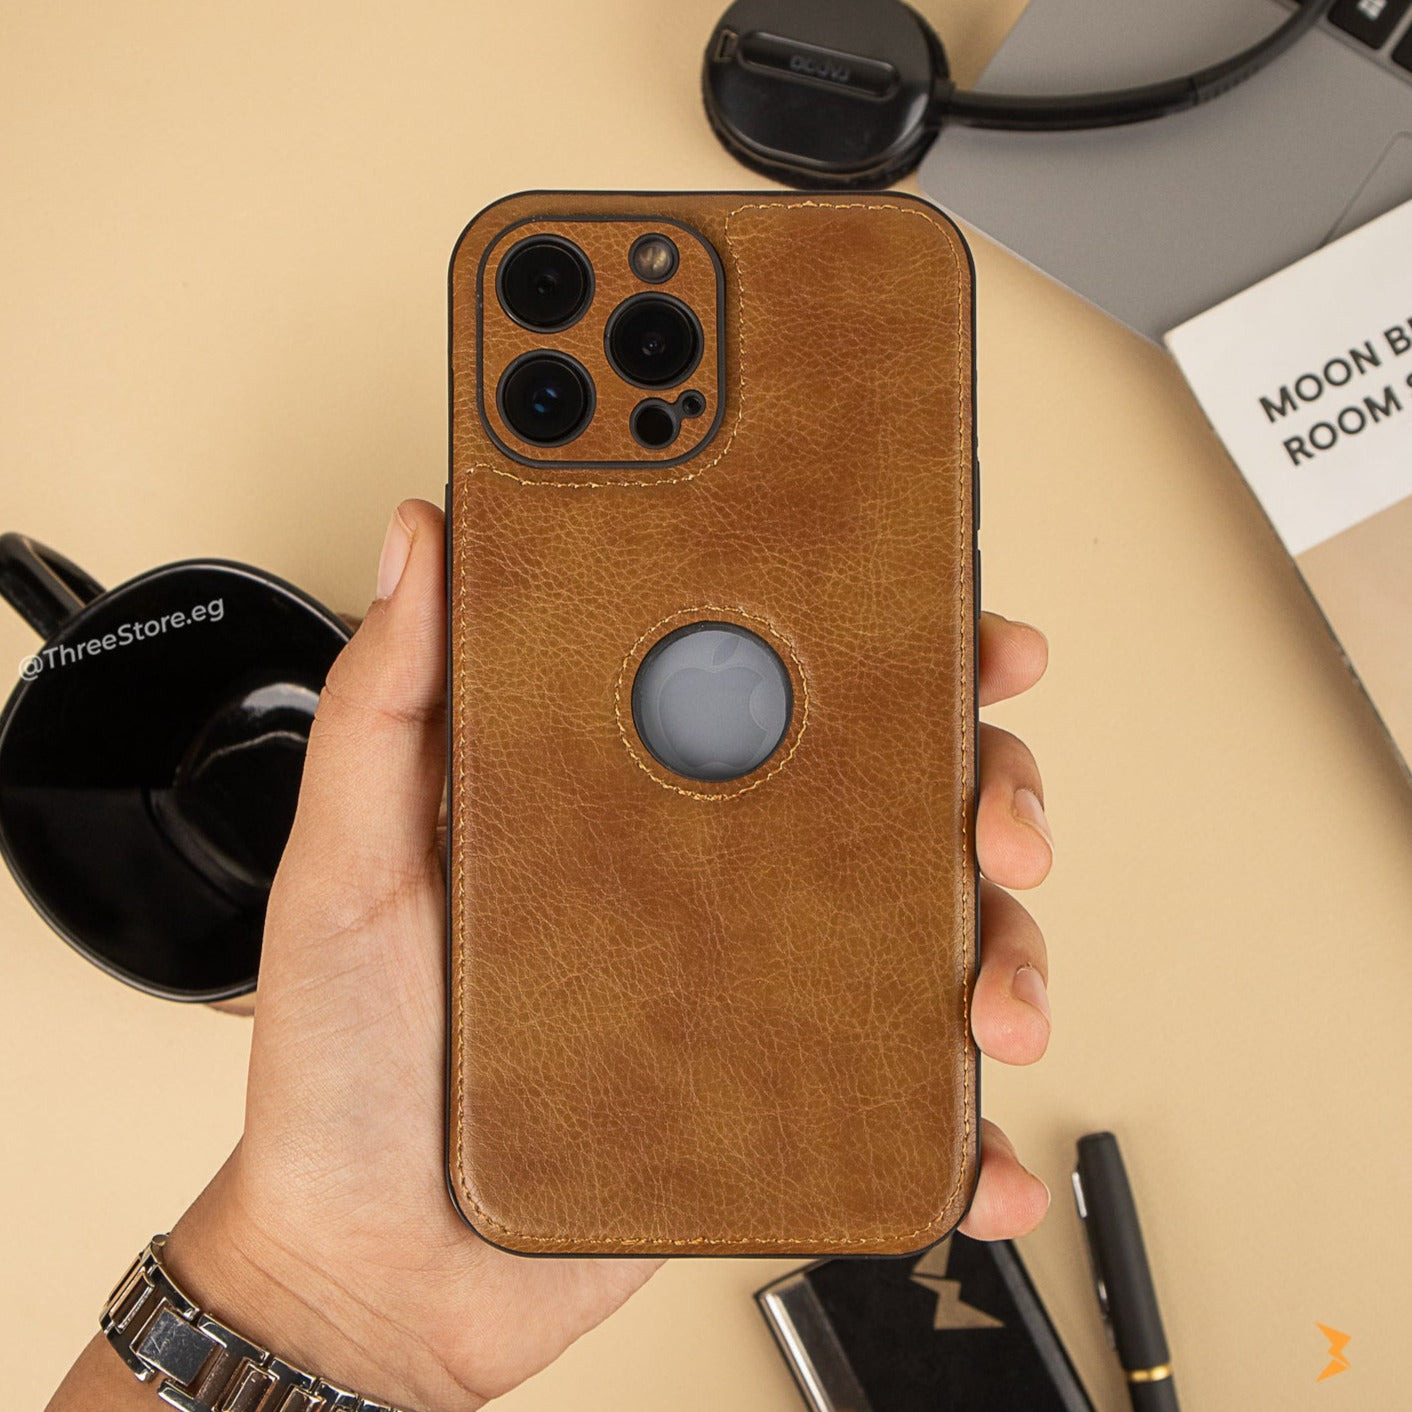 Prato Leather Case iPhone 14 Pro Max Three store